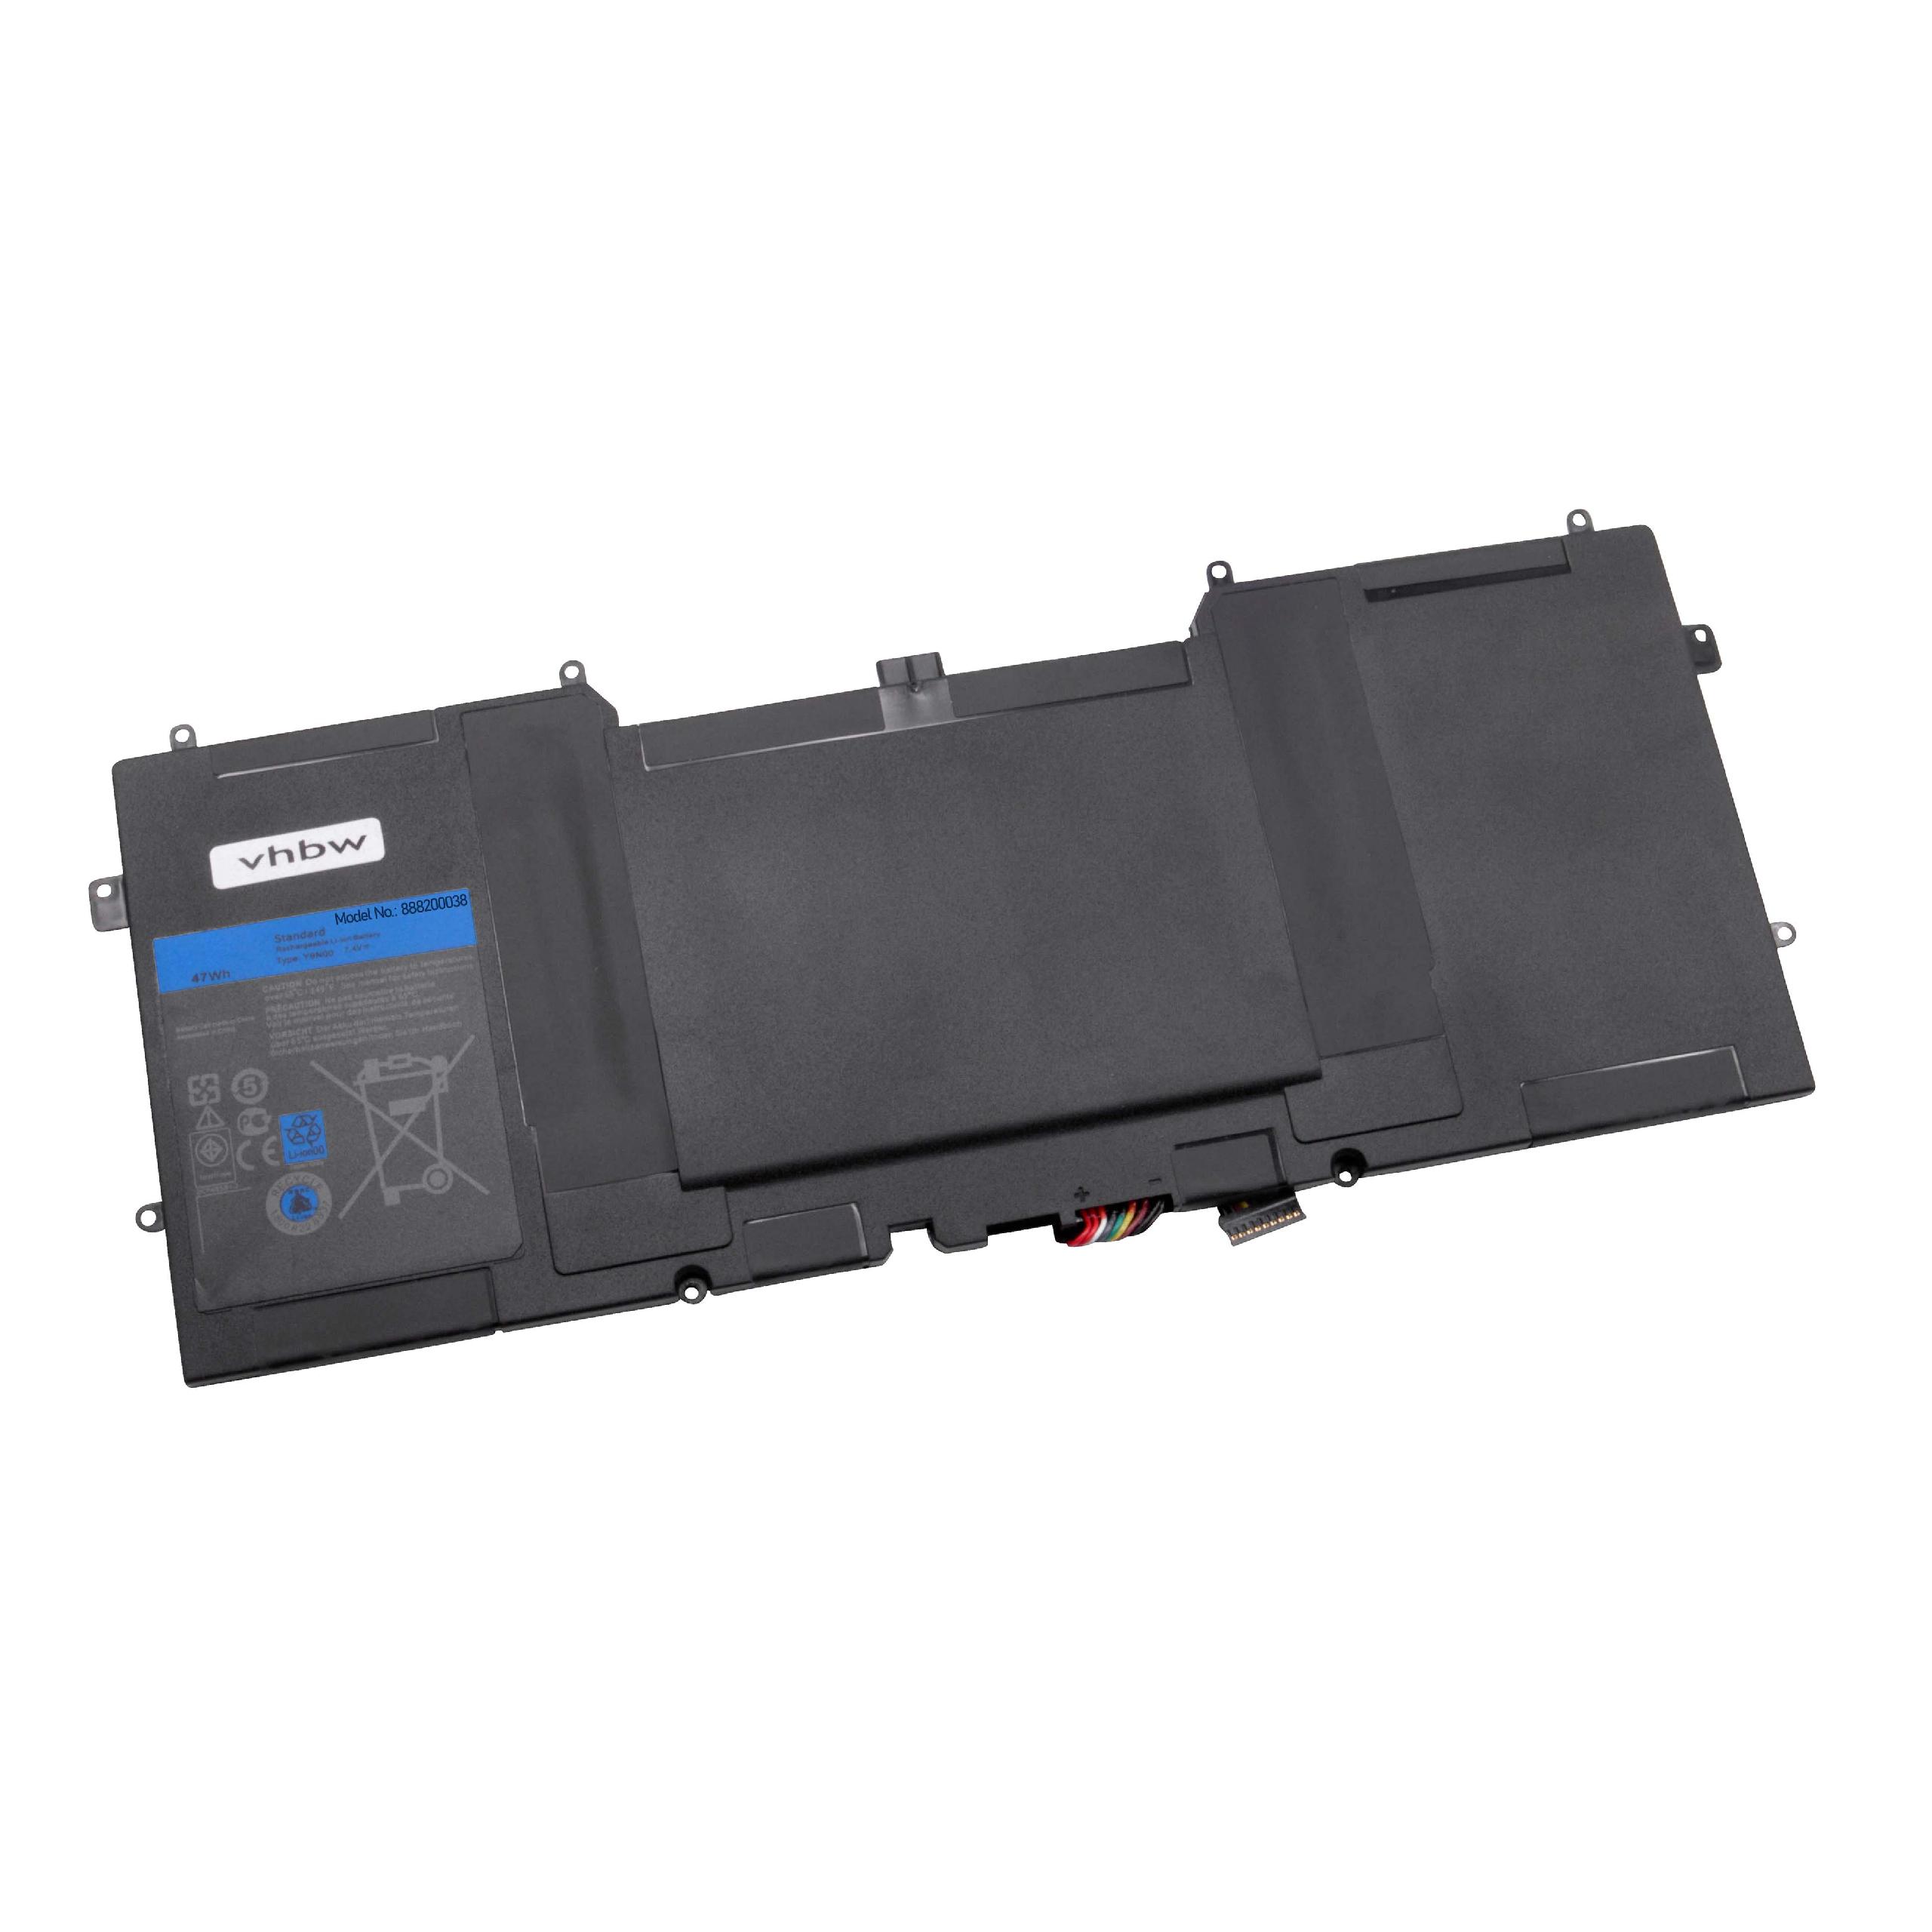 Akumulator do laptopa zamiennik Dell C4K9V, WV7G0, Y9N00 - 6300 mAh 7,4 V Li-Ion, czarny